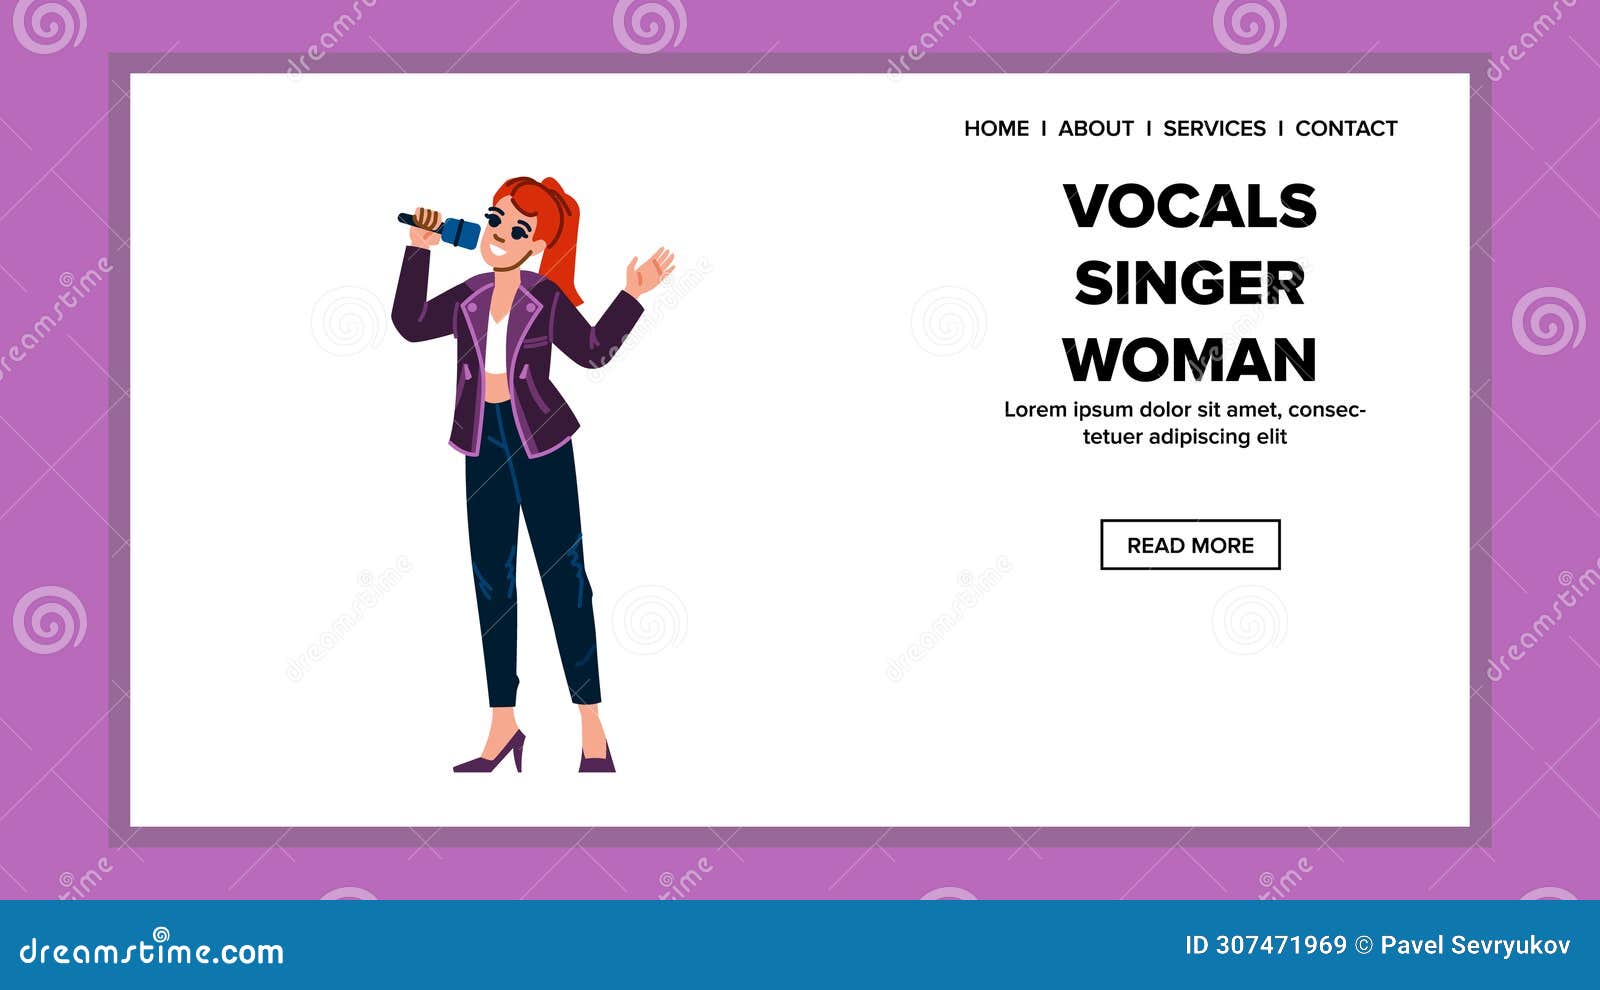 karaoke vocals singer woman 